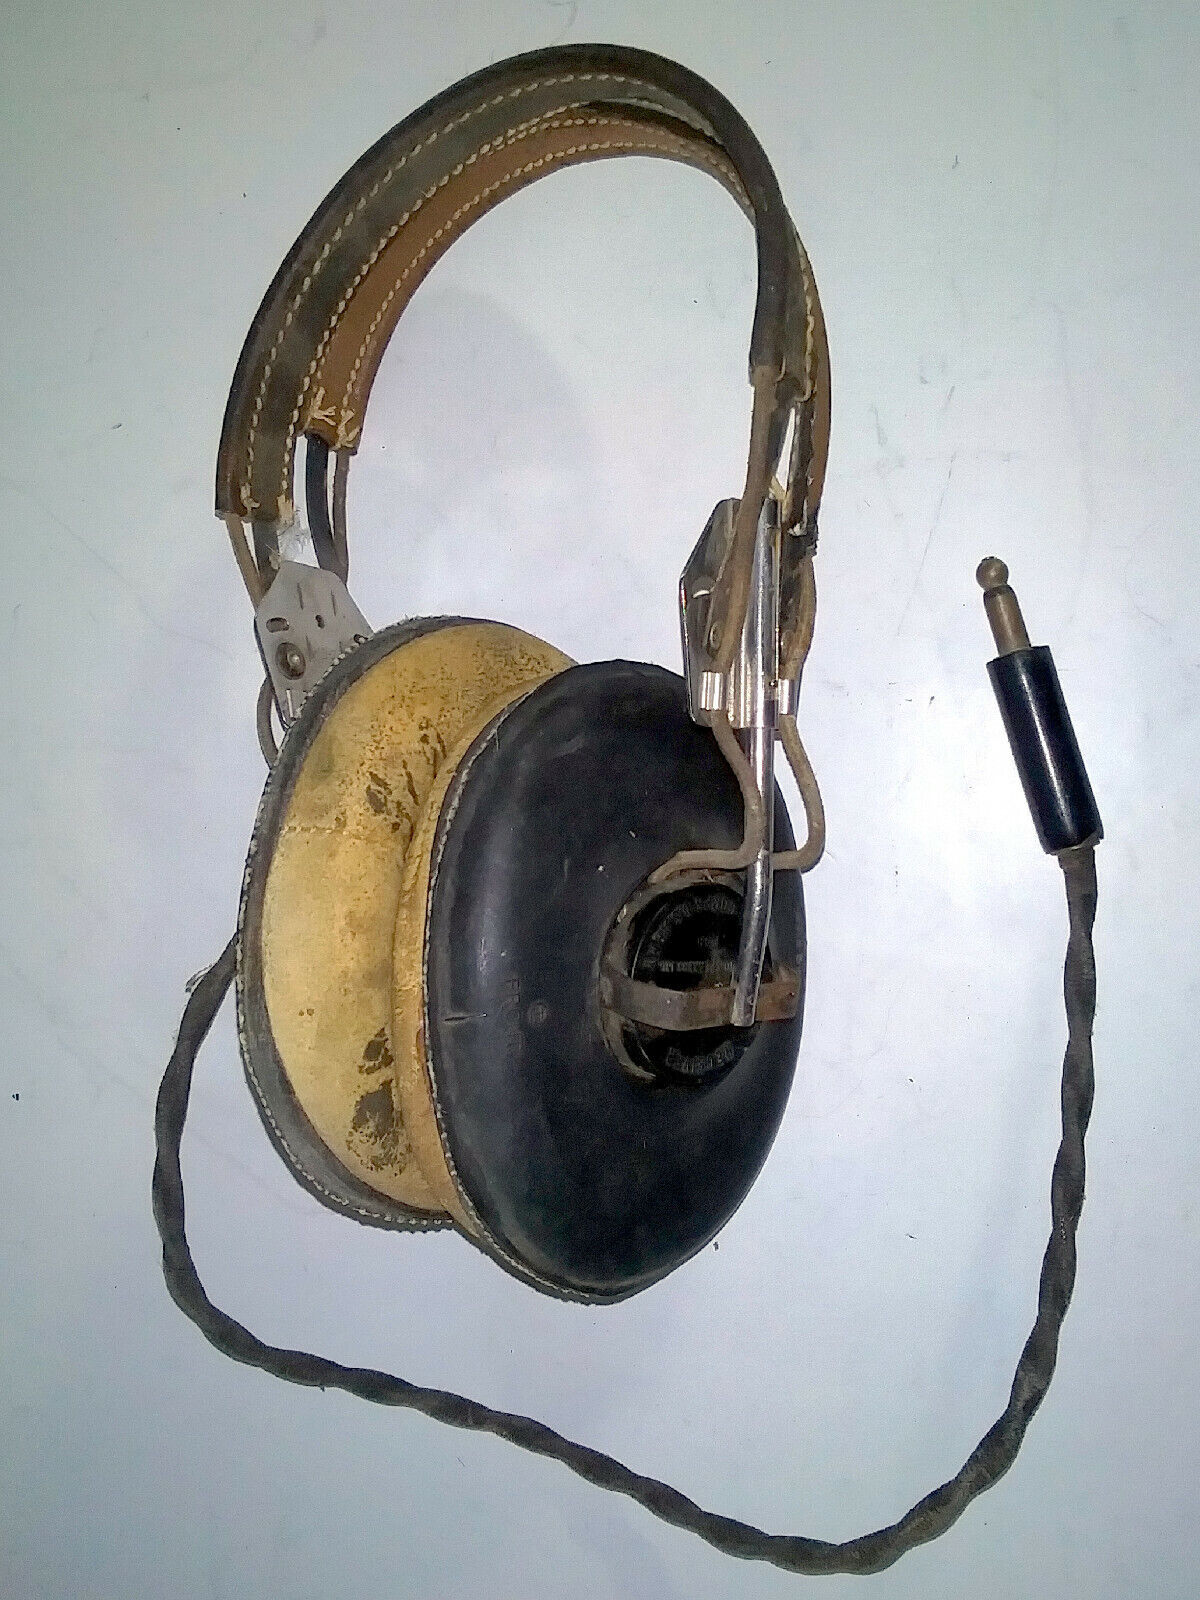 Us Army Signal Corp R-14 Headset - World War Ii Era - Amazing Condition